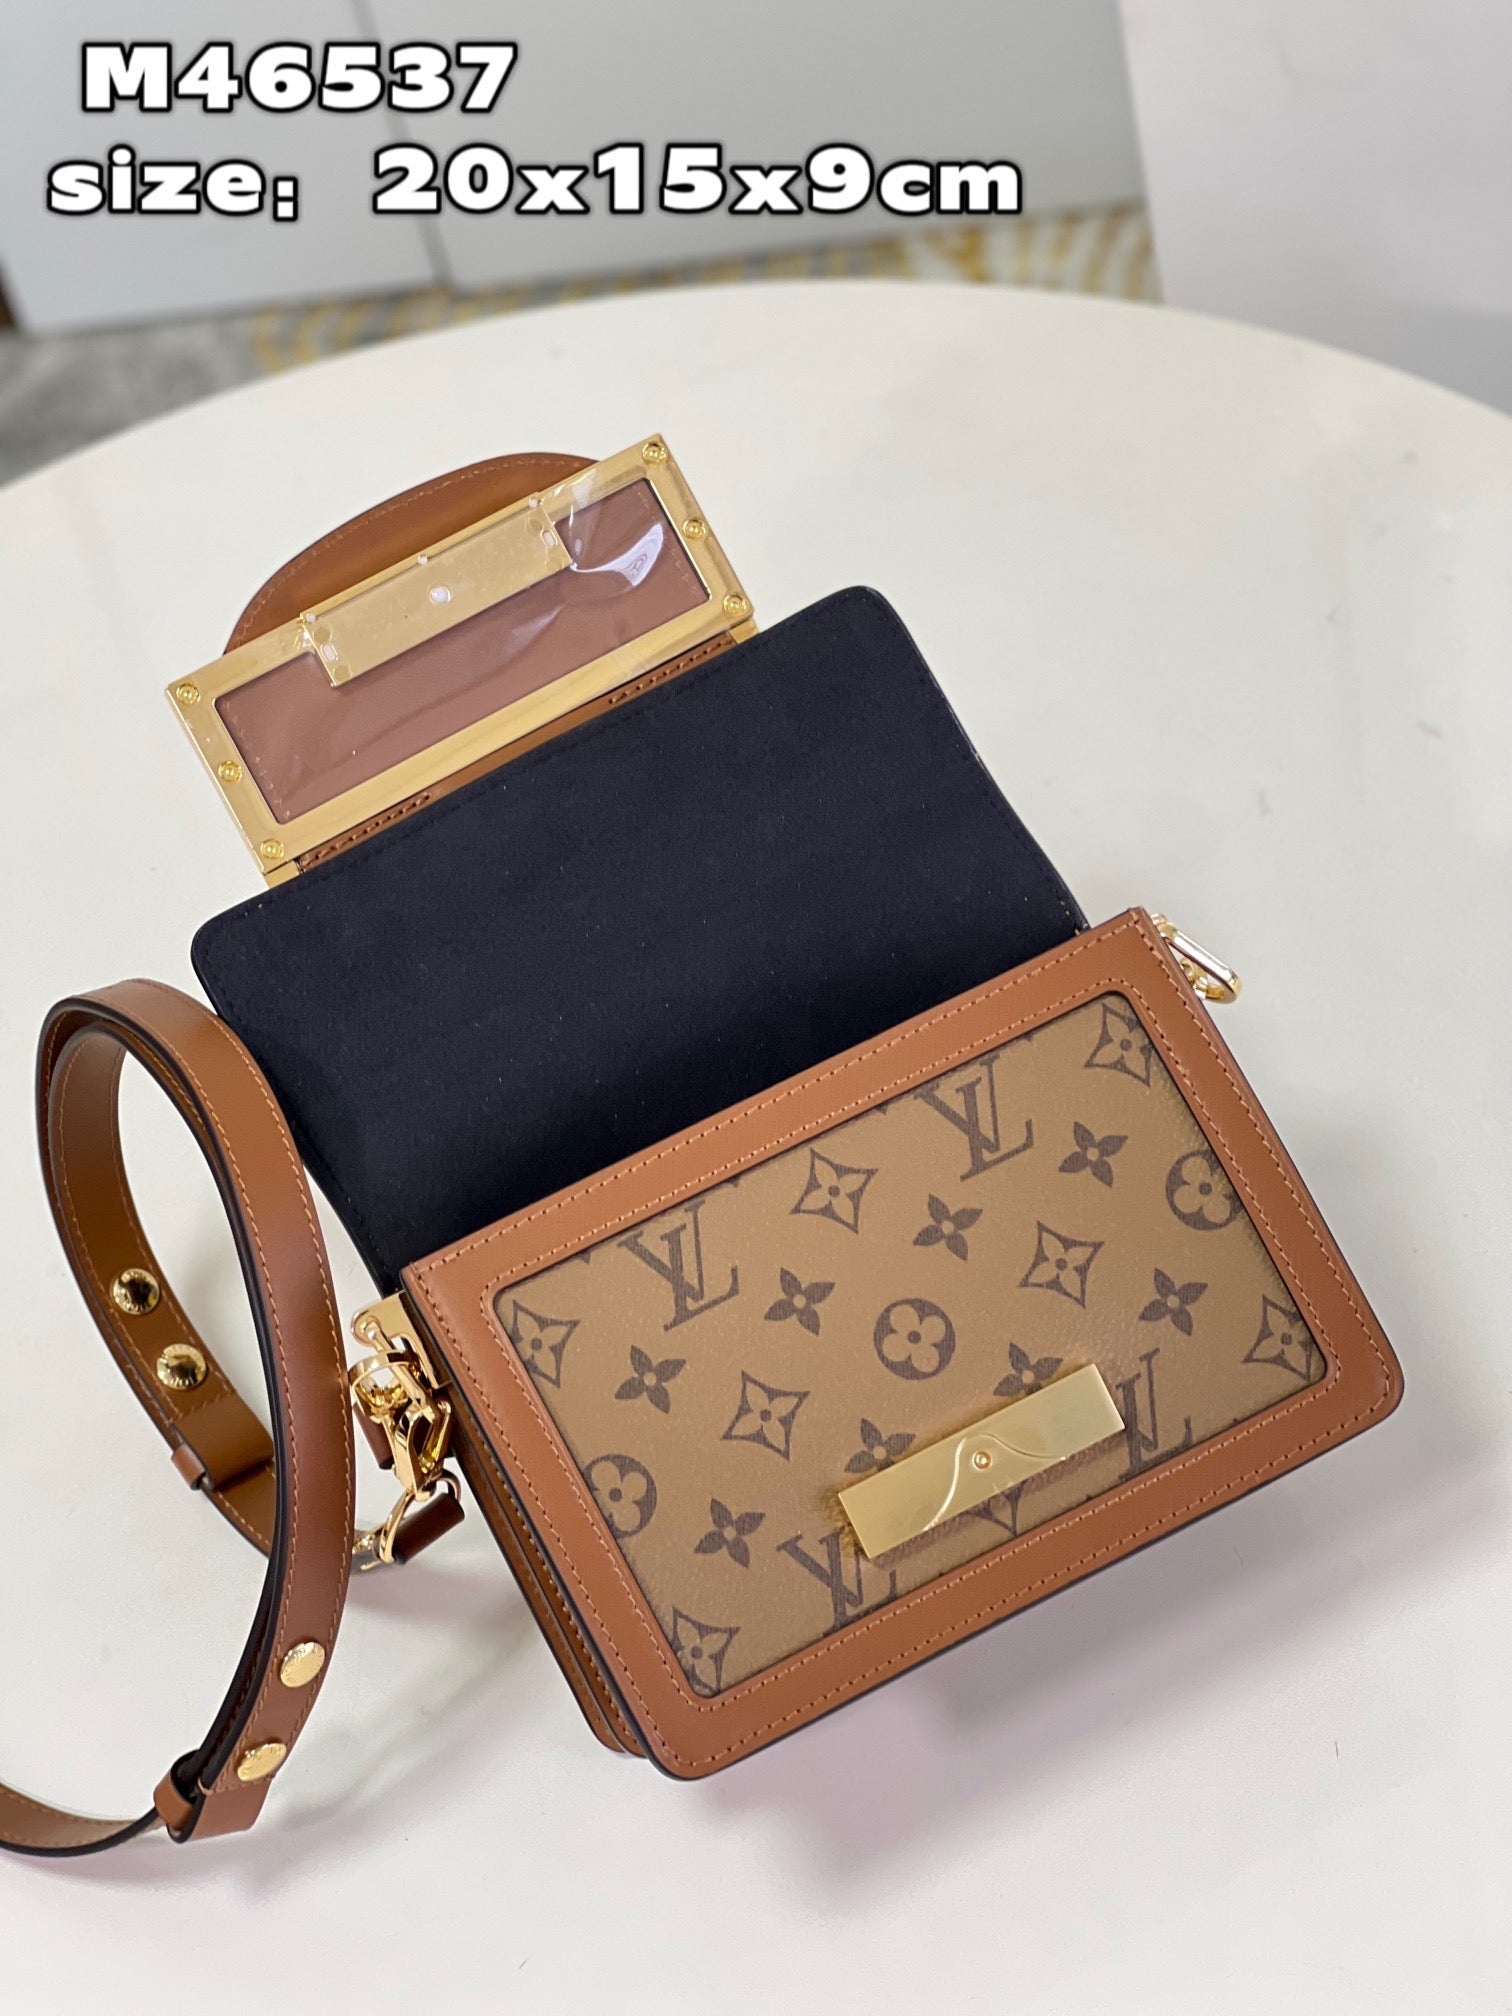 Dauphine belt bag leather handbag Louis Vuitton Brown in Leather